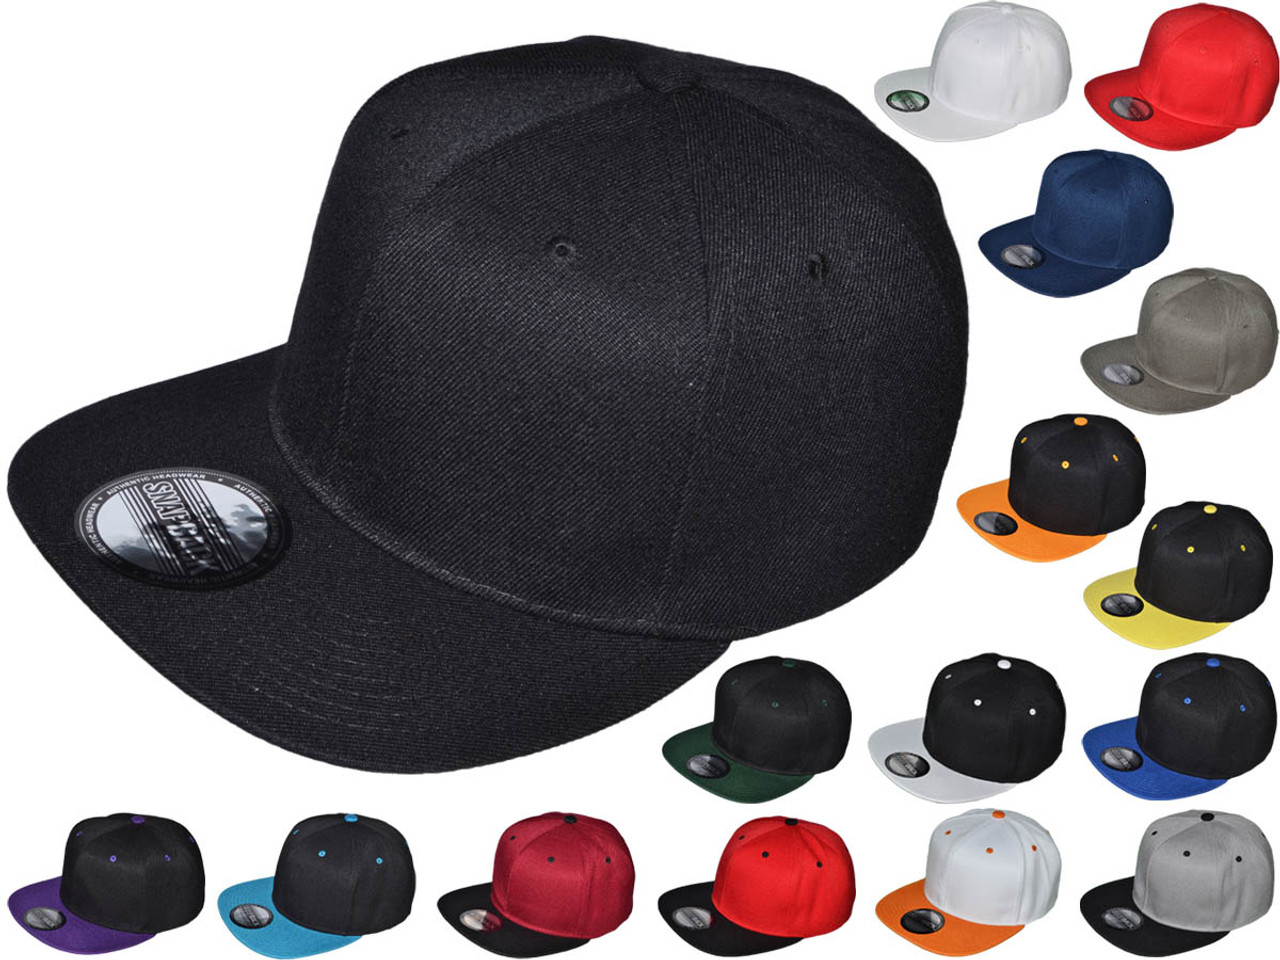 Wholesale Flat Bill Blank/Plain Snapback Hats with Same Color Underbill,  Black, white, gray, green, blue, pink, fuchsia, red, camo, digital camo,  heather gray, 2 tone, burgundy, purple, lime, neon